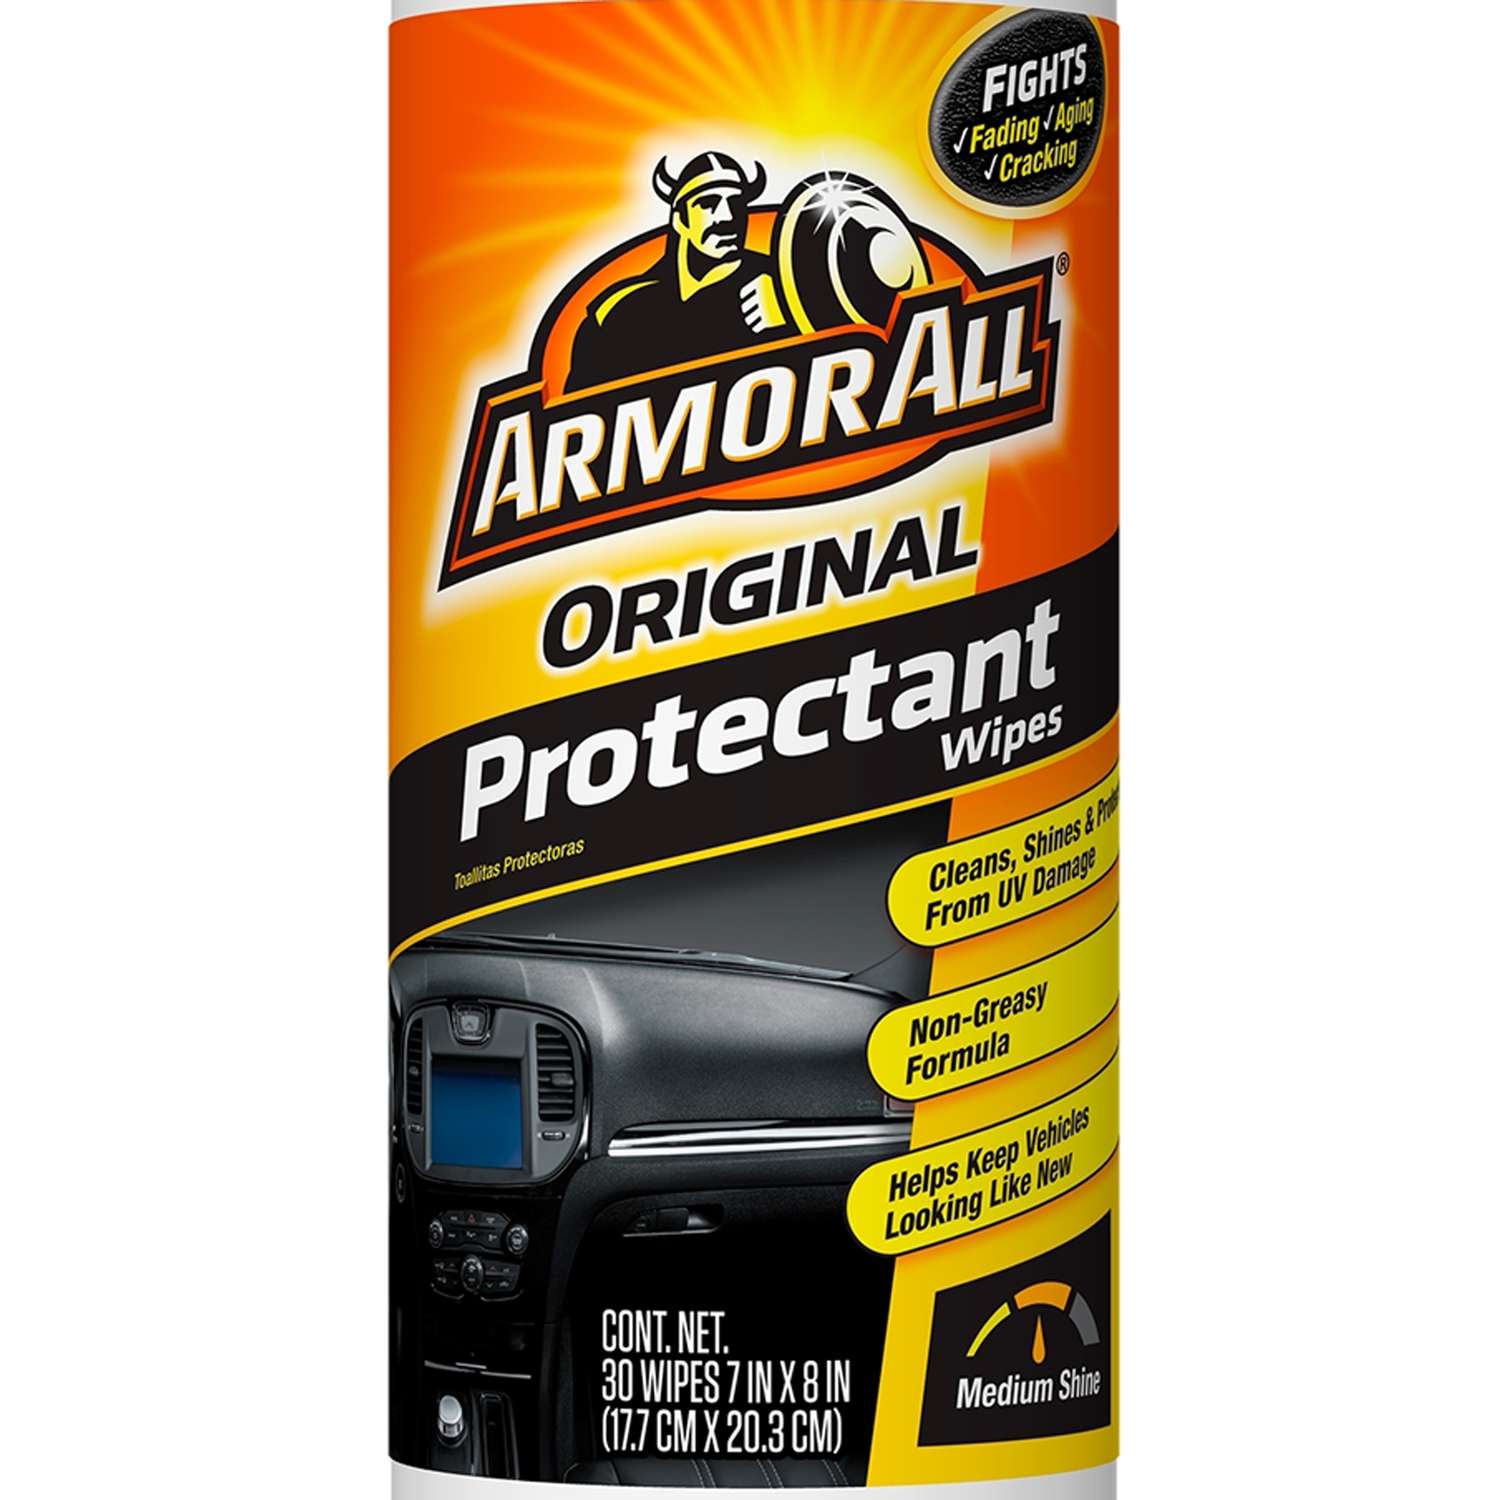 Armor All Original Protectant Refill Car Interior Protectant for